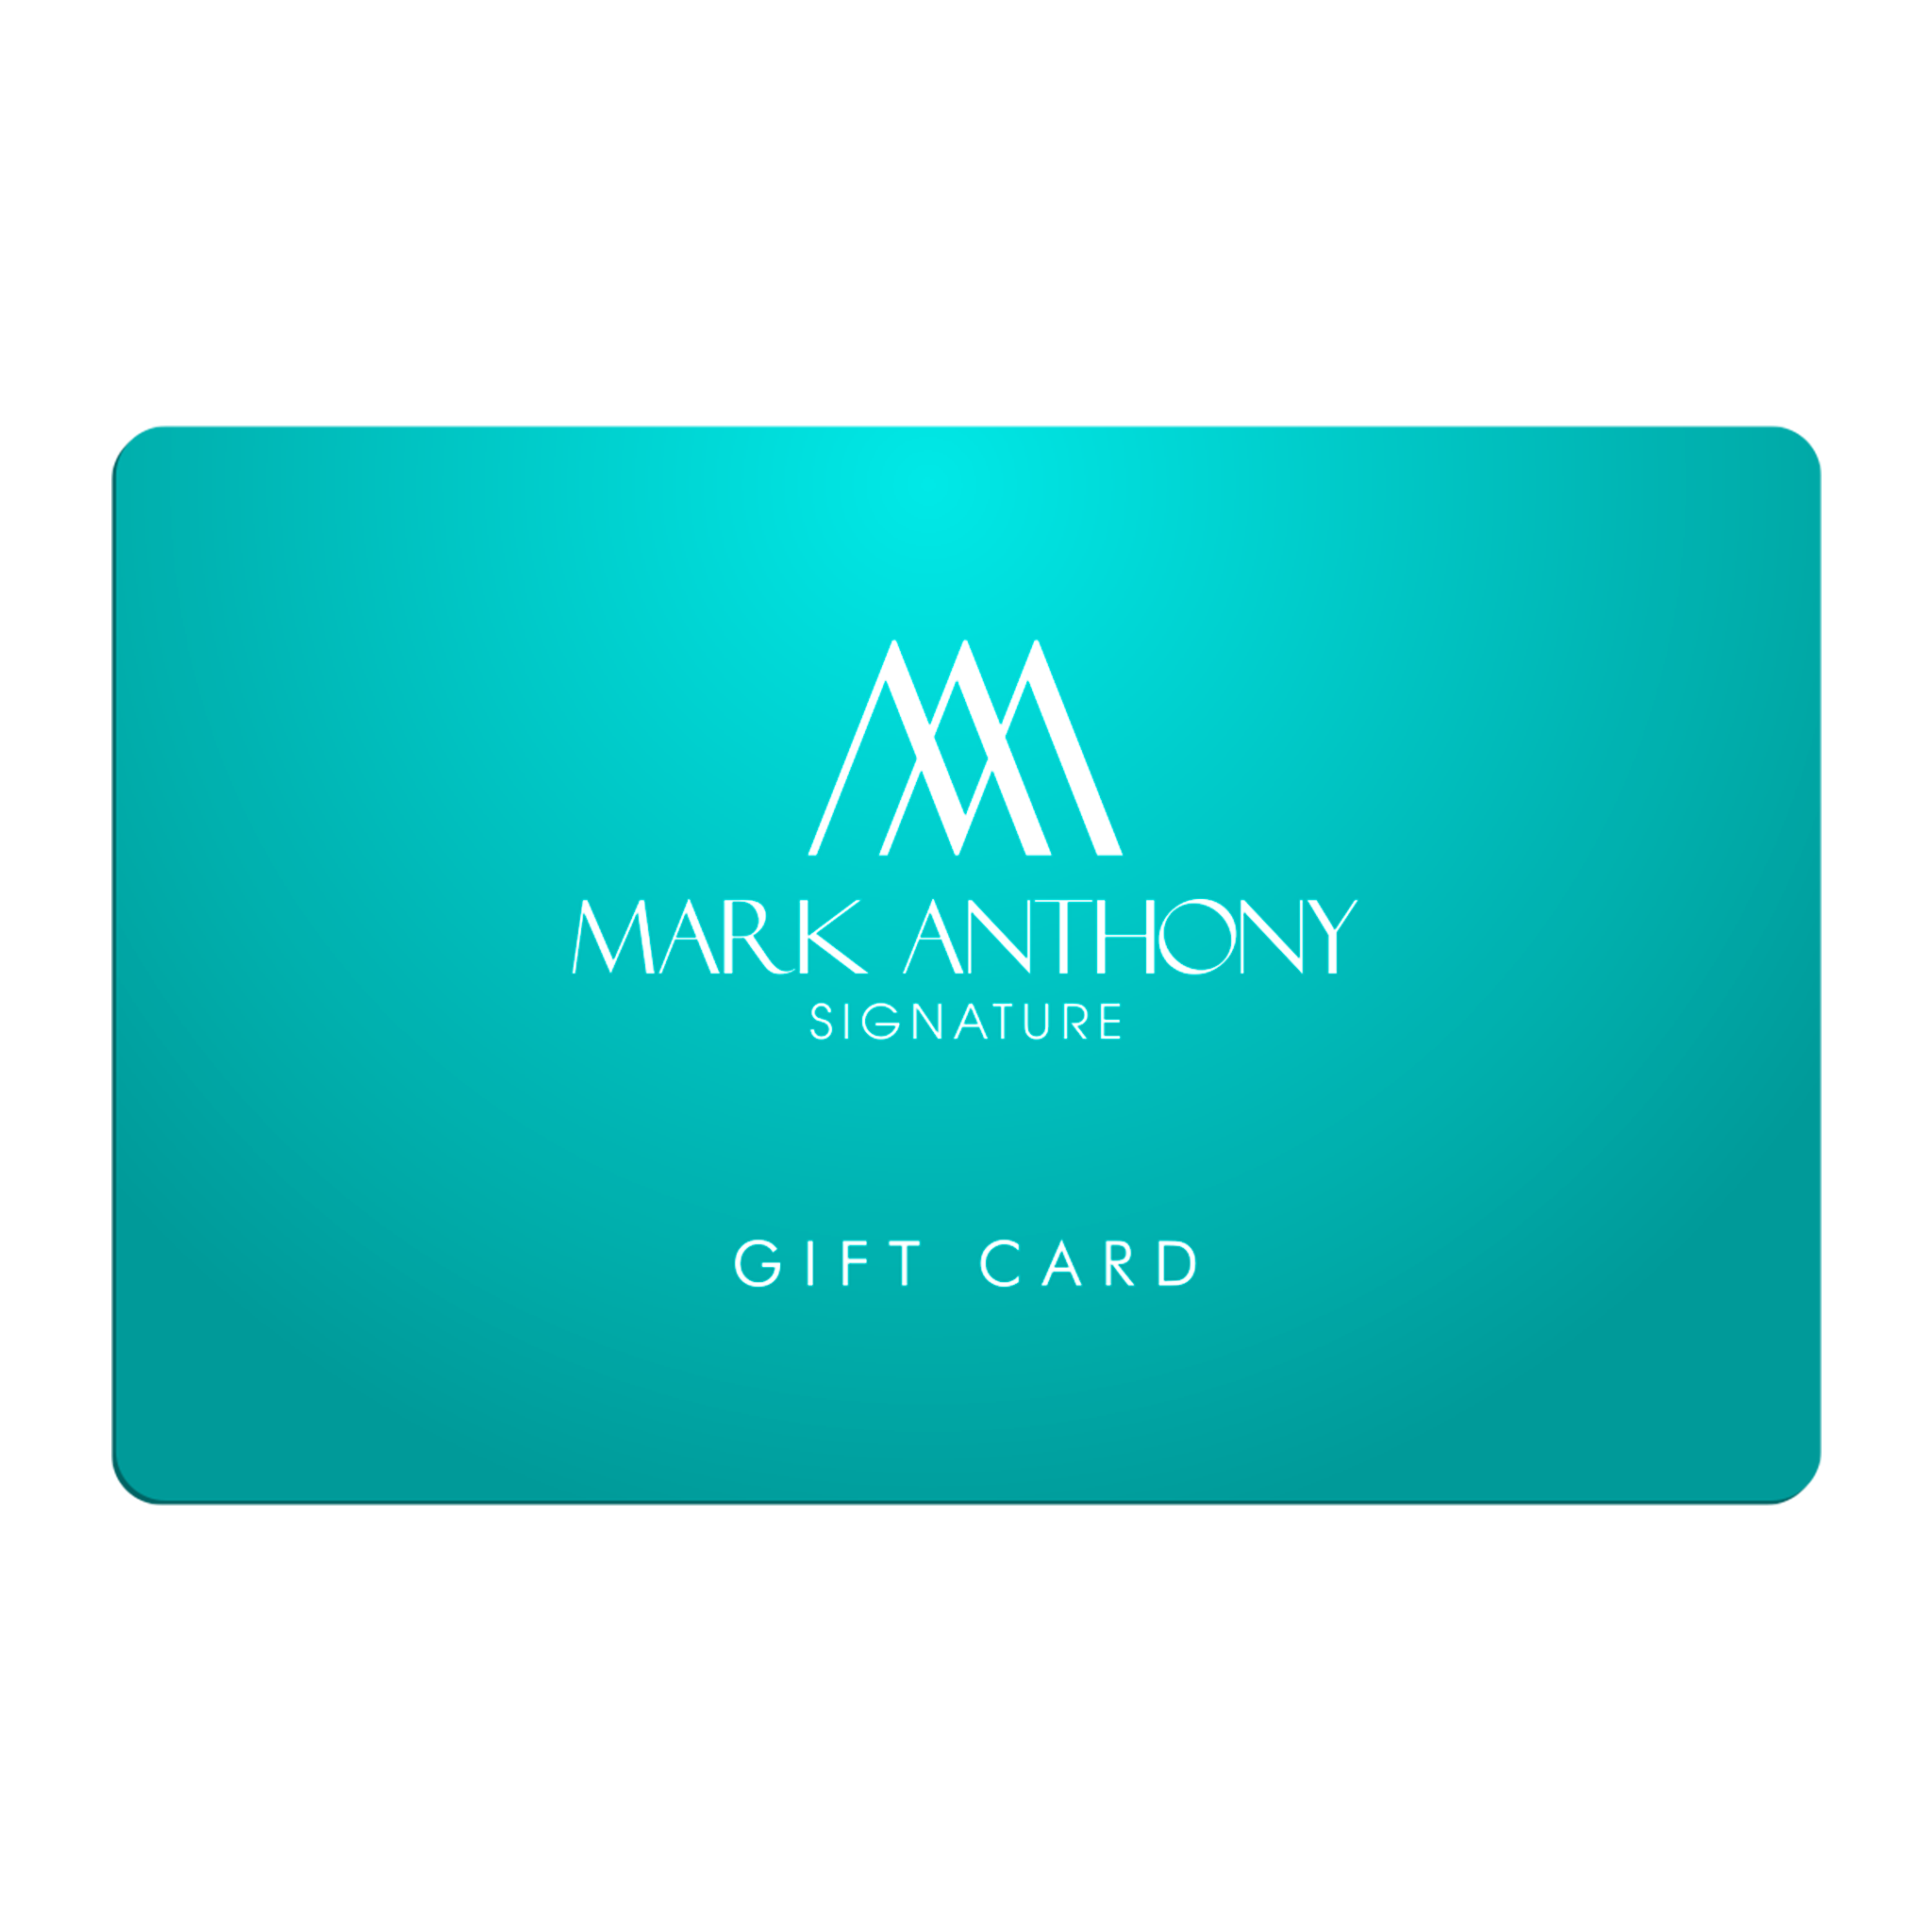 The Mark Anthony Signature Gift Card